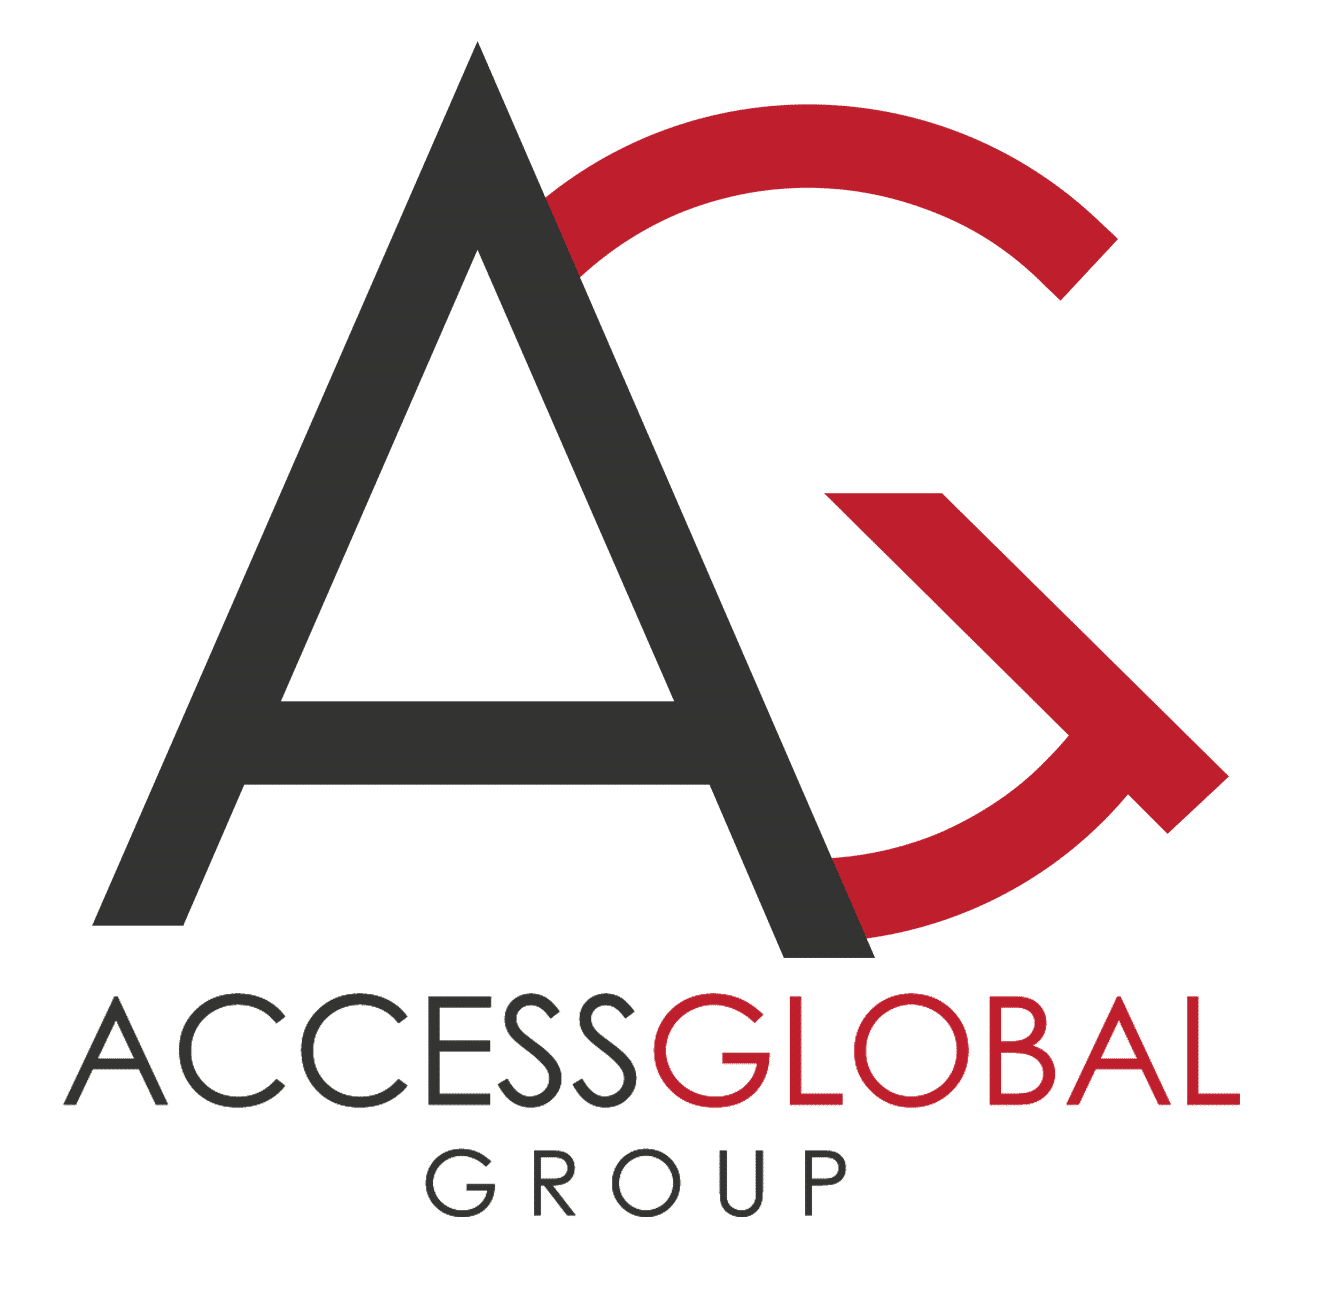 Access группа